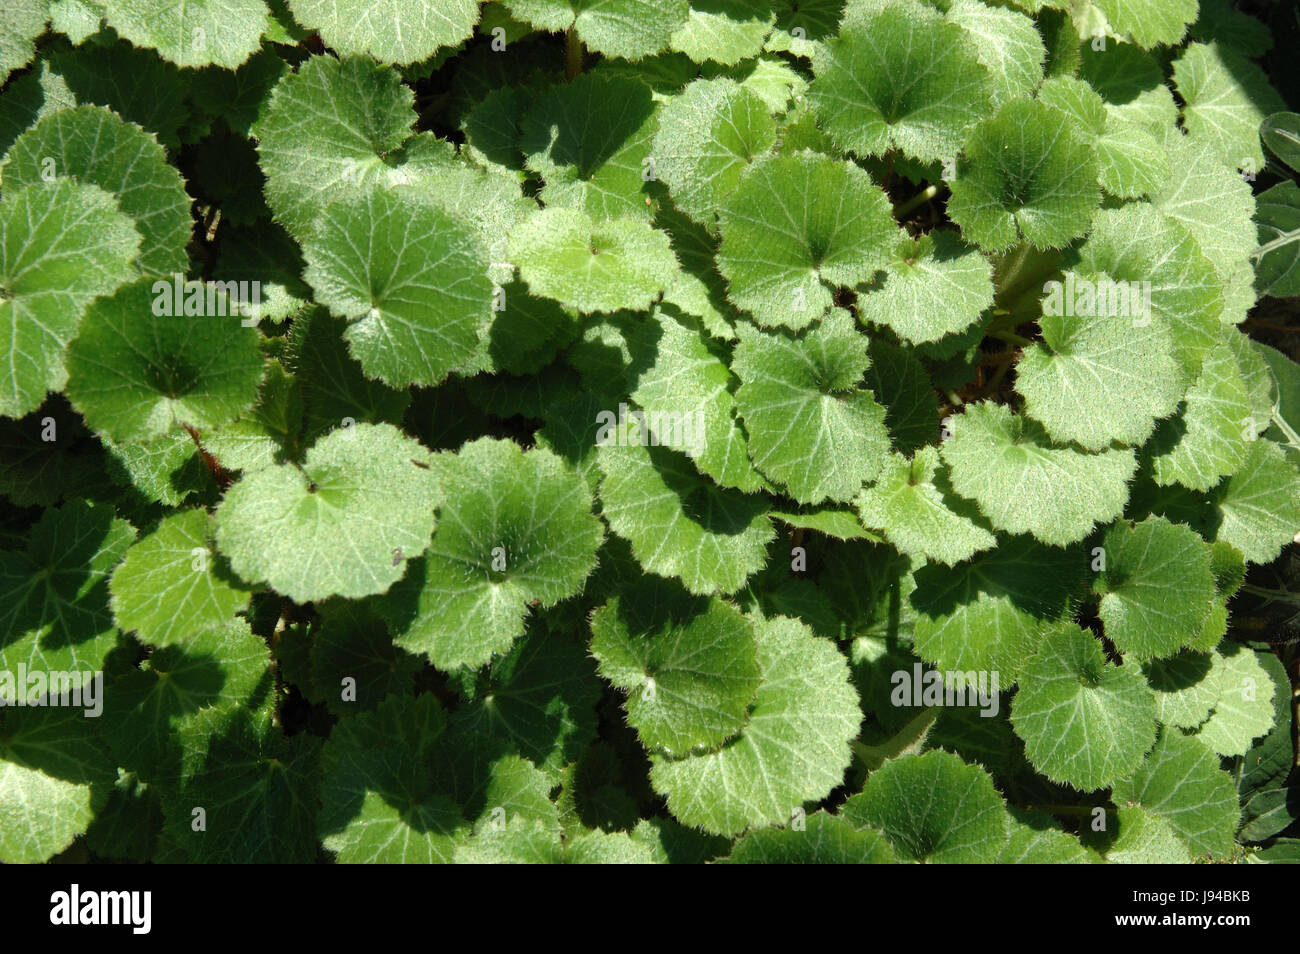 leaf, garden, flower, plant, strawberry, grow, lawn, green, geranium, Stock Photo